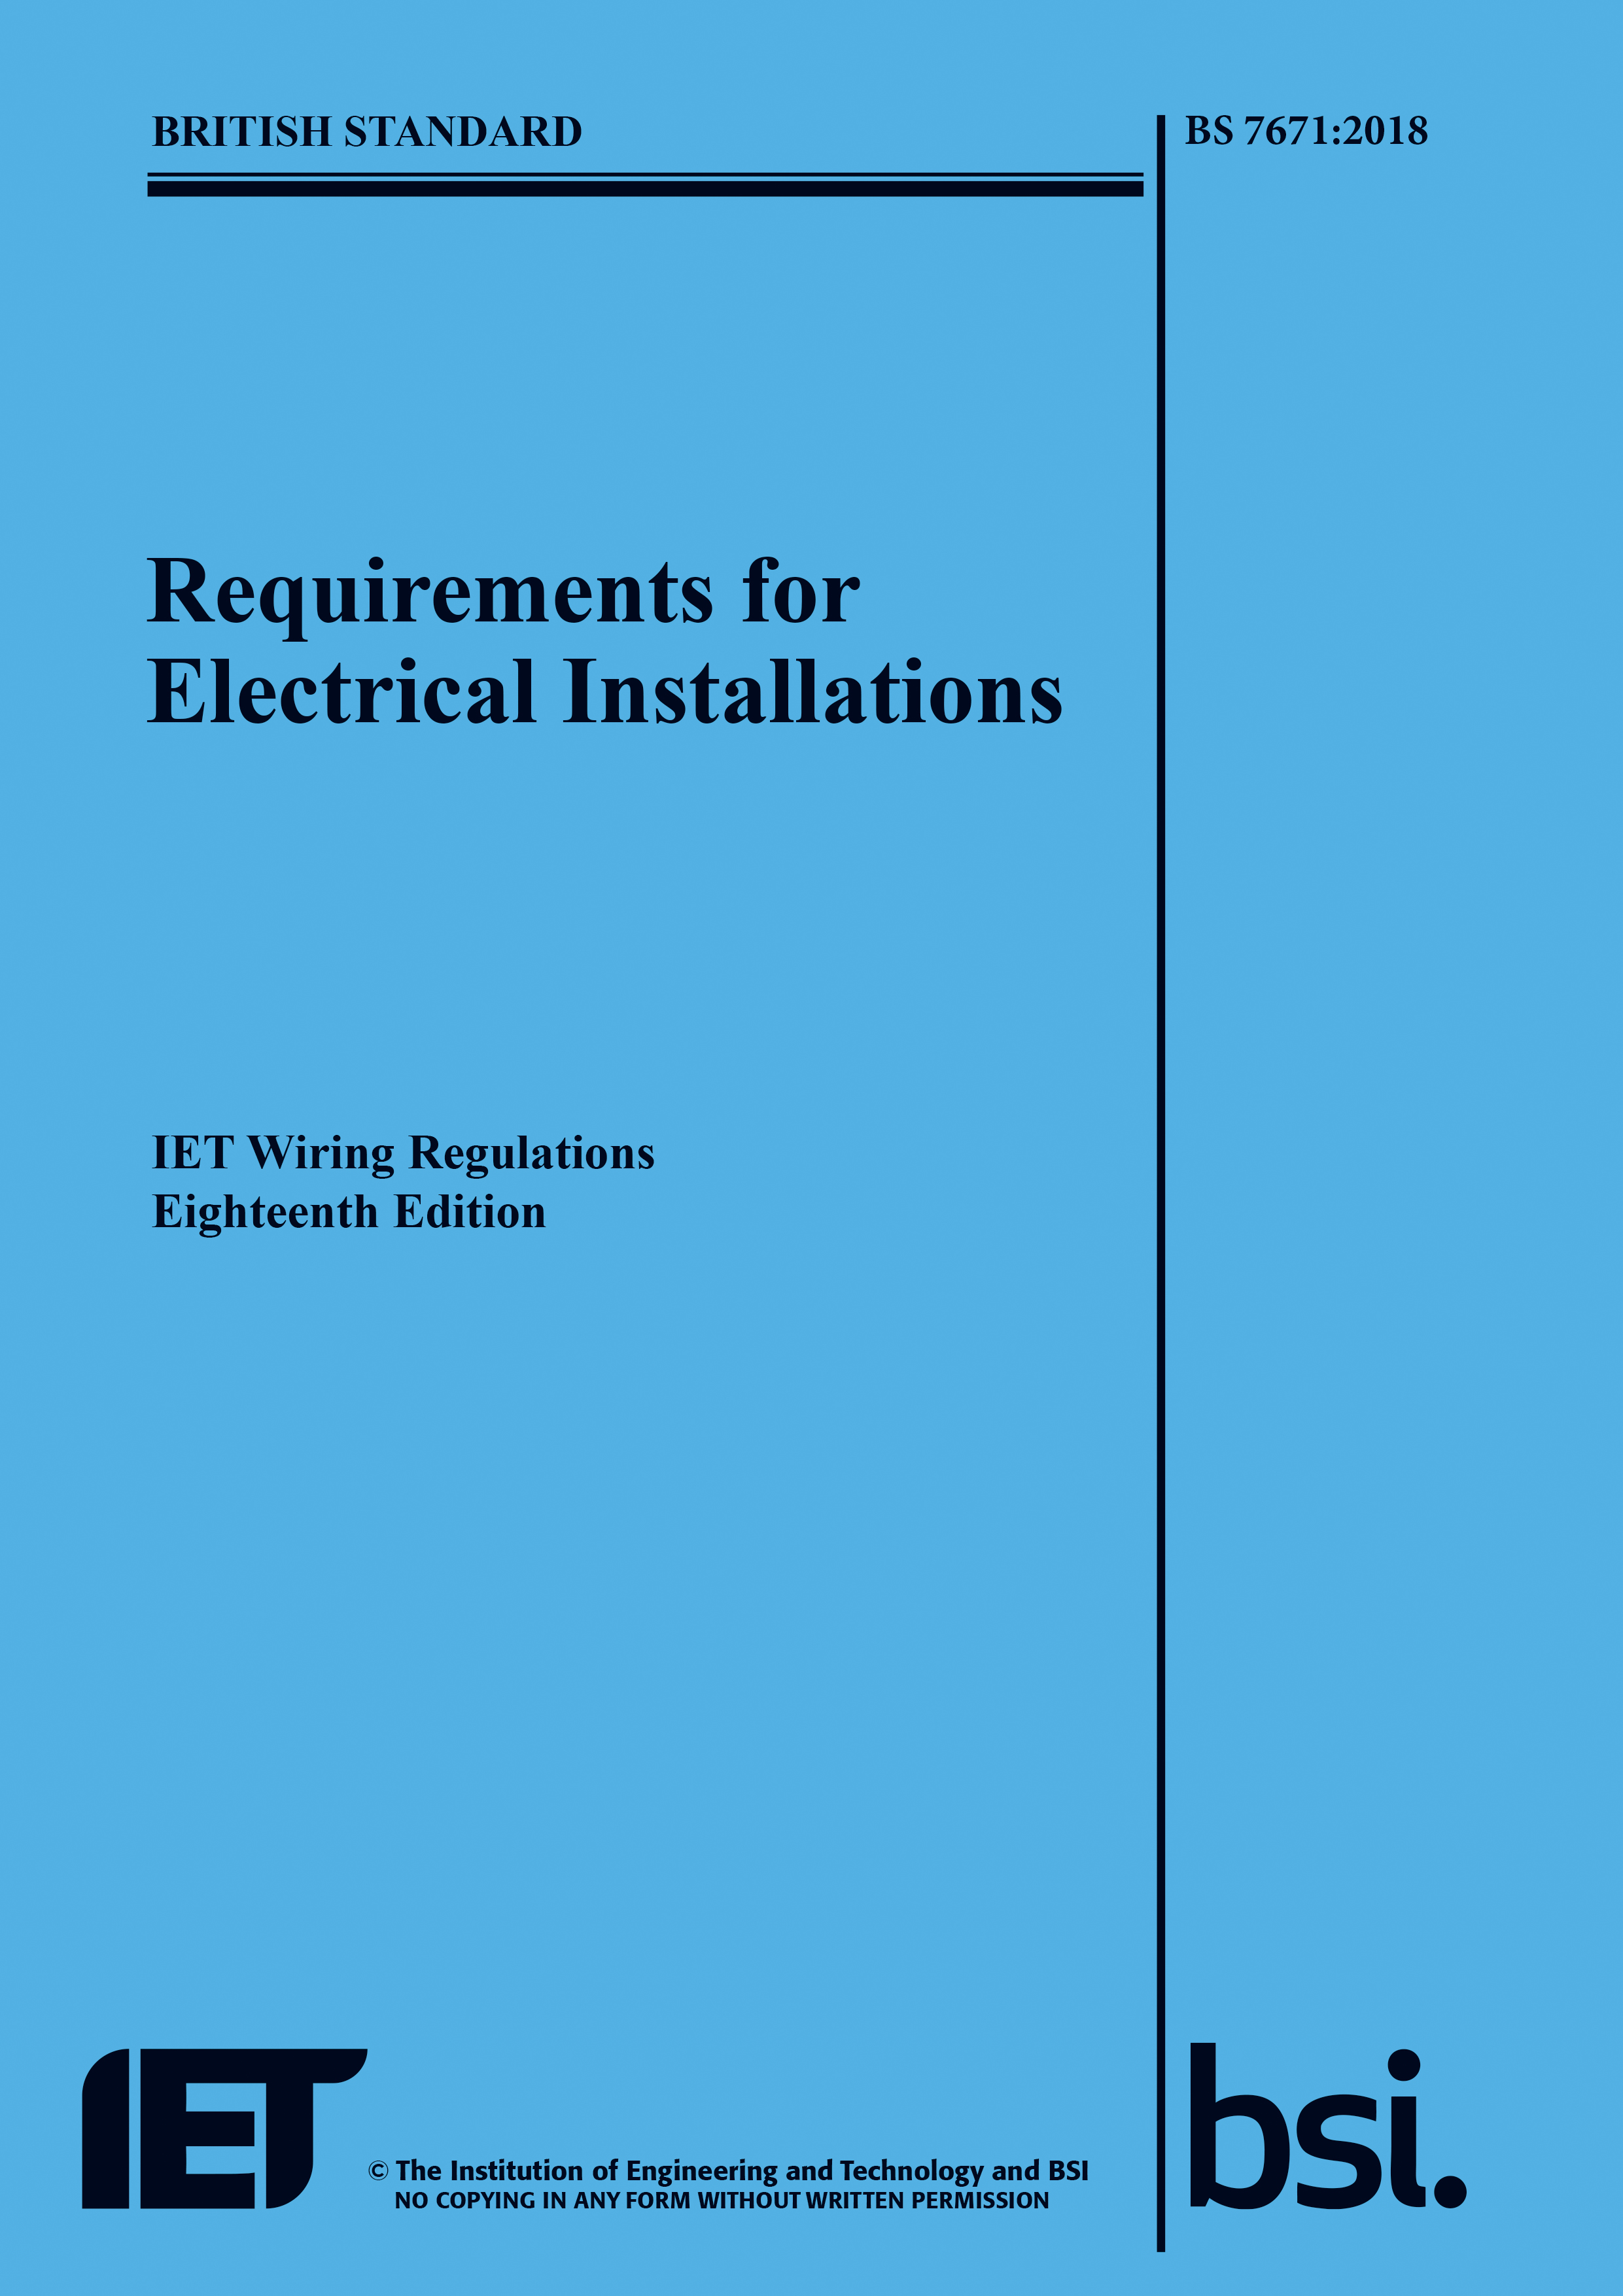 17th Edition Wiring Regulations Pdf